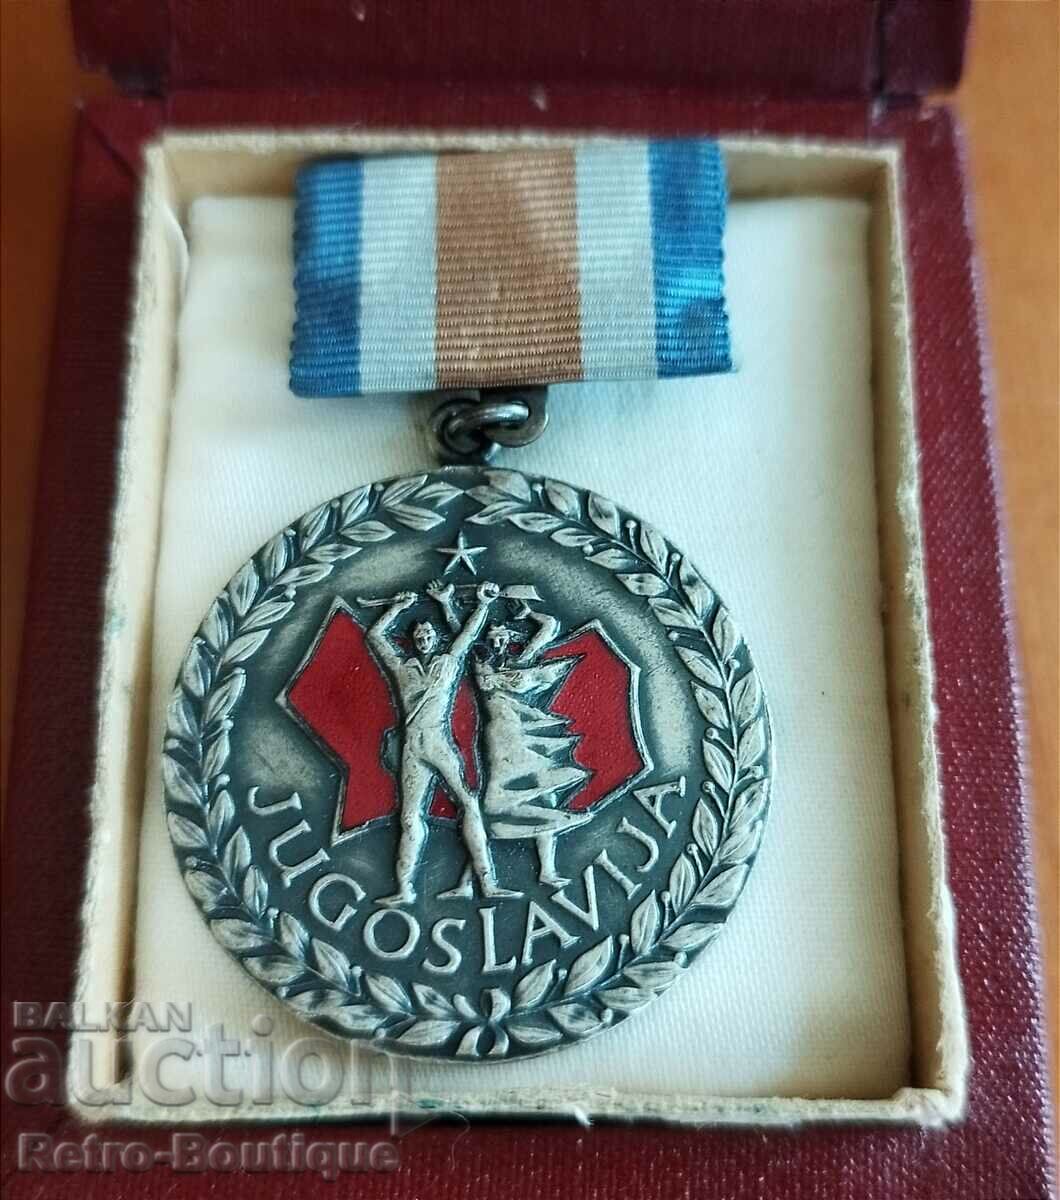 Yugoslavia Medal, 1941-1945